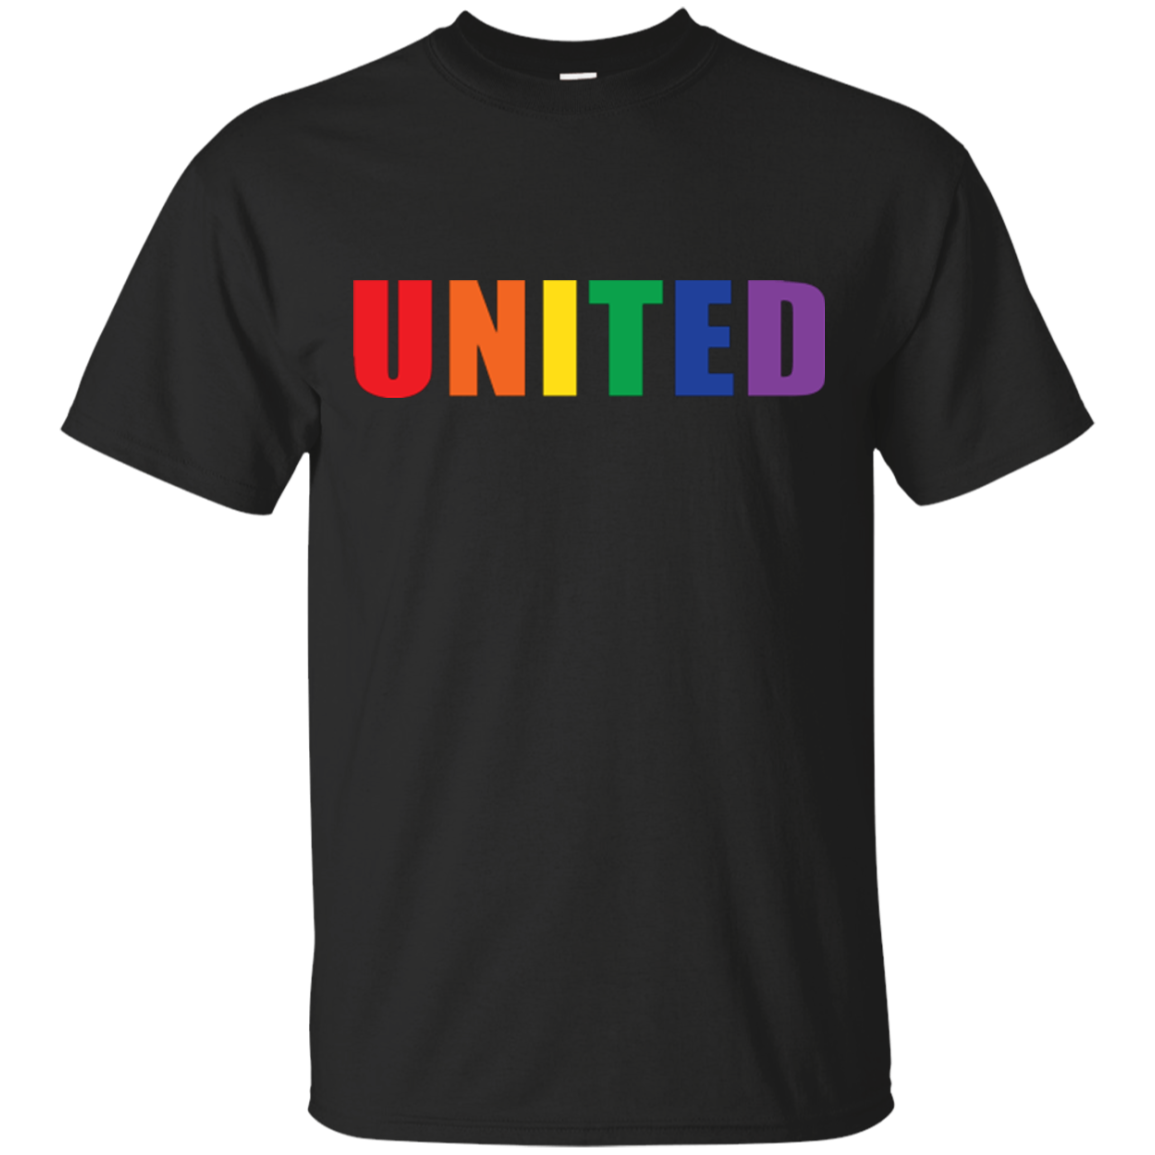 "United" Gay Pride Round Neck Black Shirt LGBT Pride Tshirt for Men